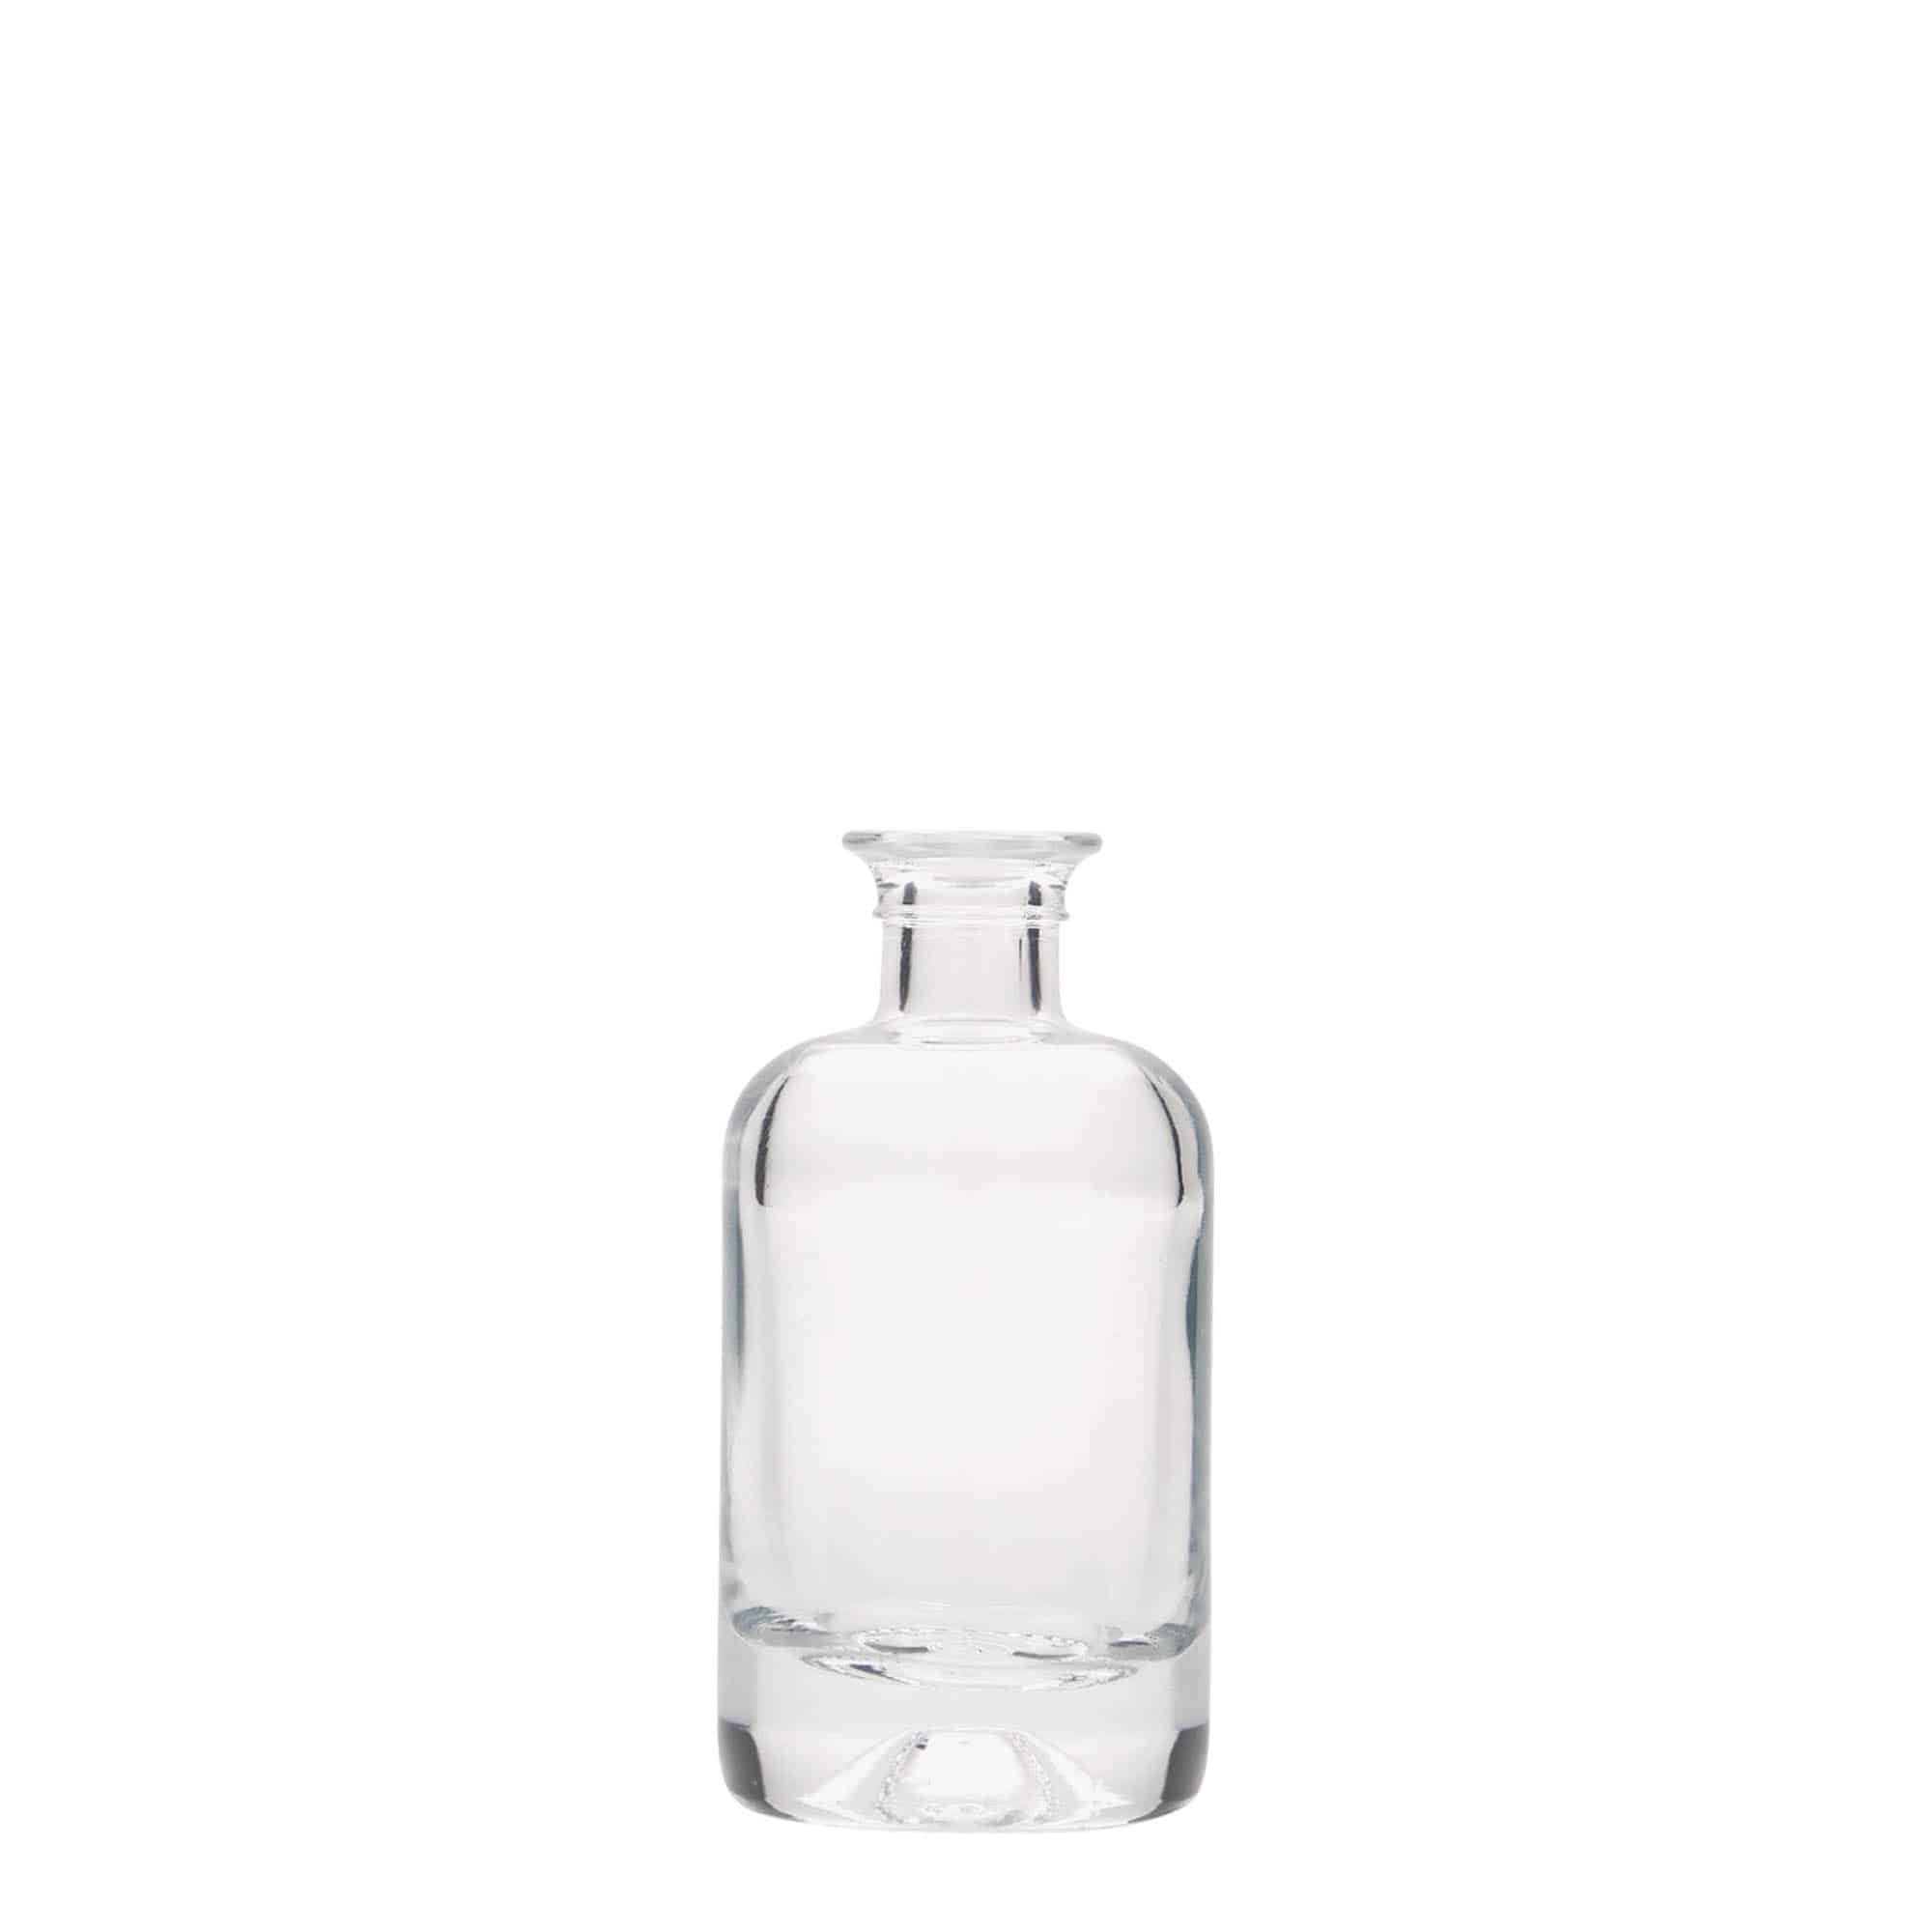 40 ml Glasflasche Apotheker, Mündung: Kork